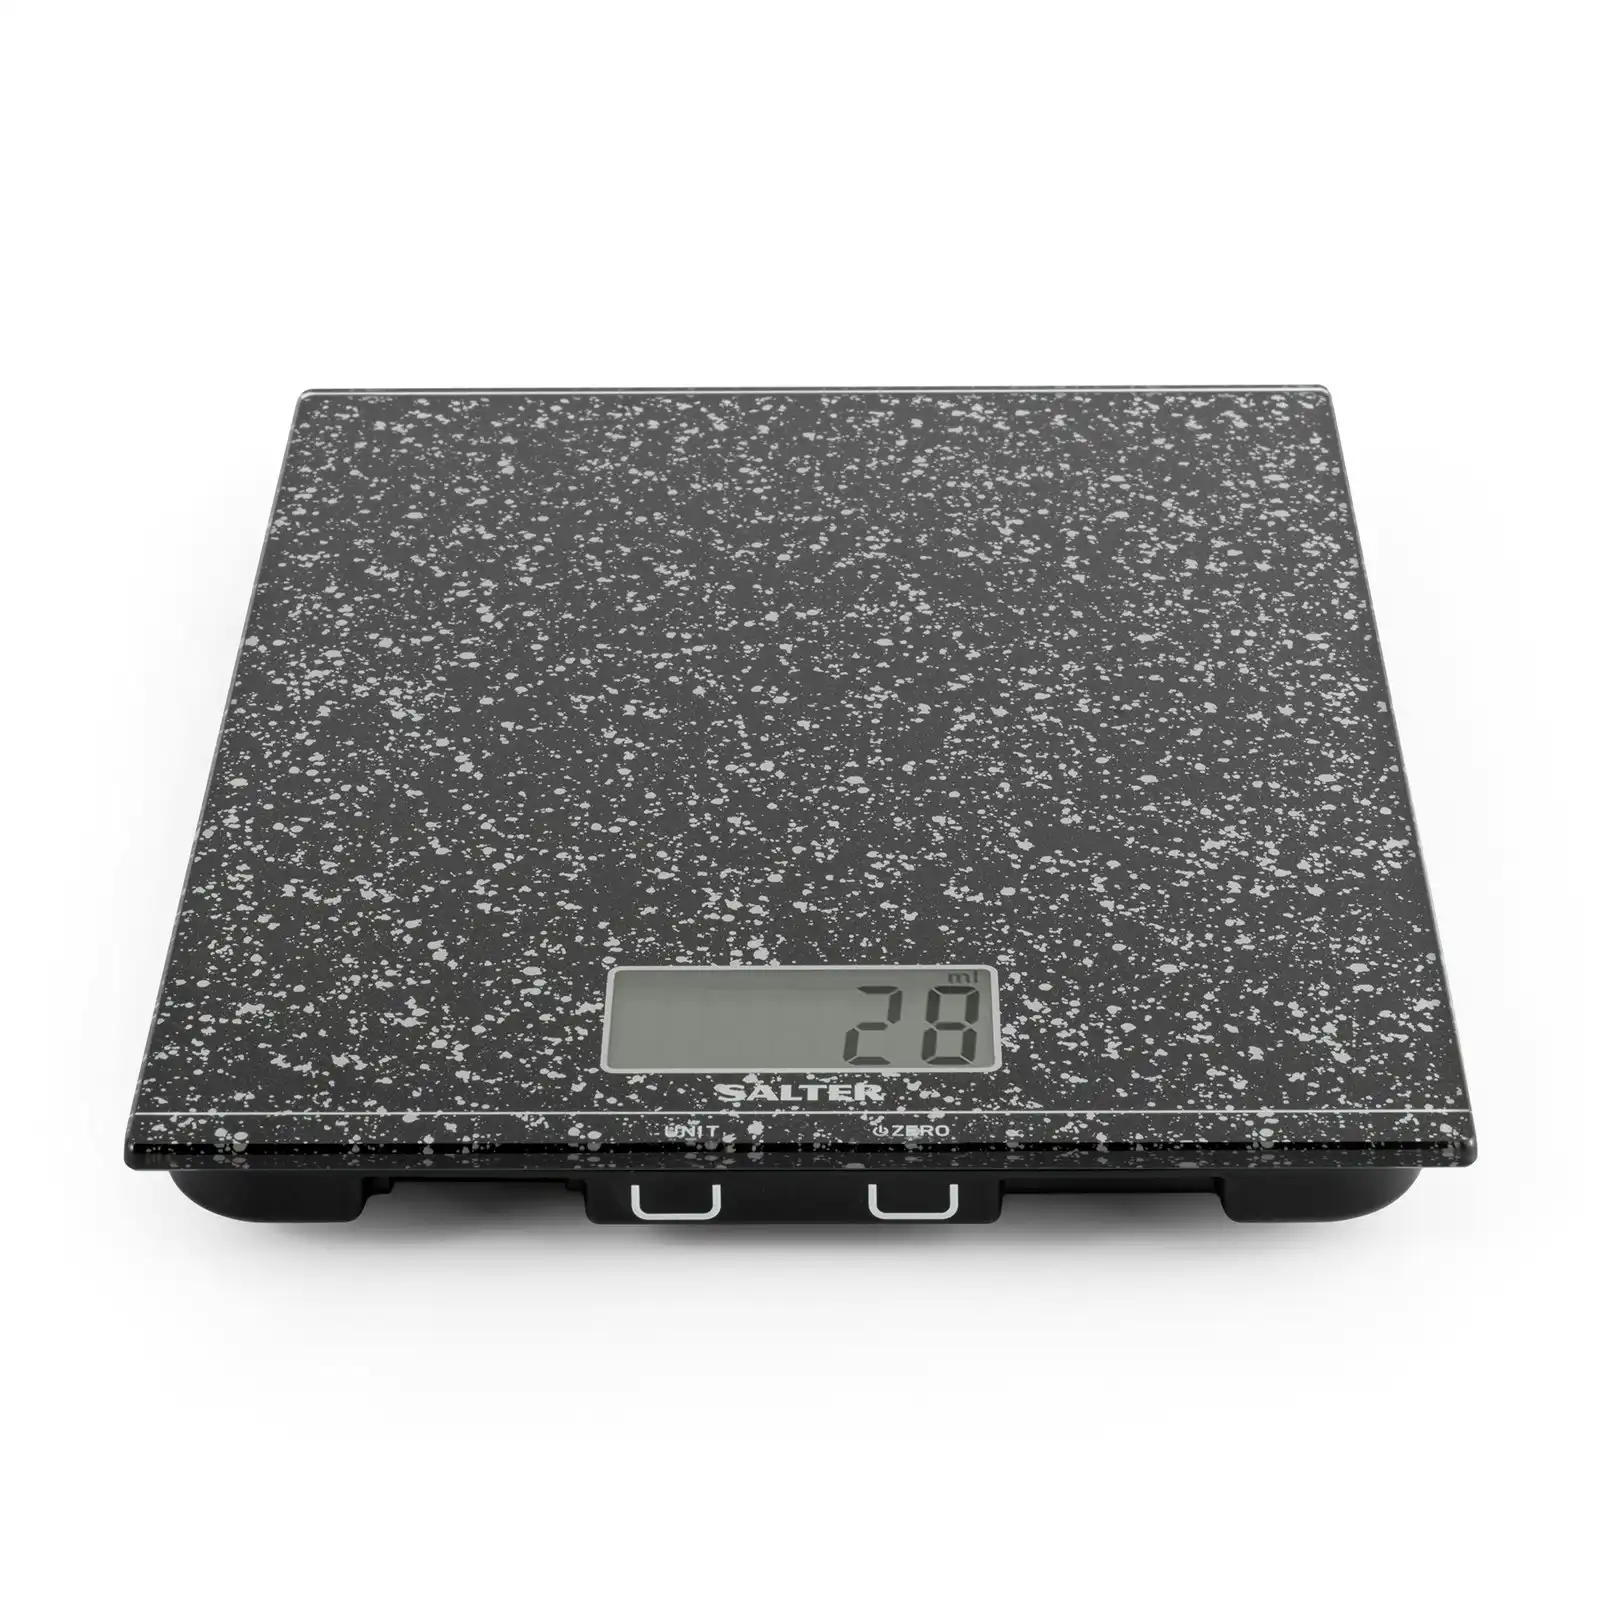 Salter Glitter Electronic Kitchen Tare/Zero Digital Glass Weight Scale 5kg Black